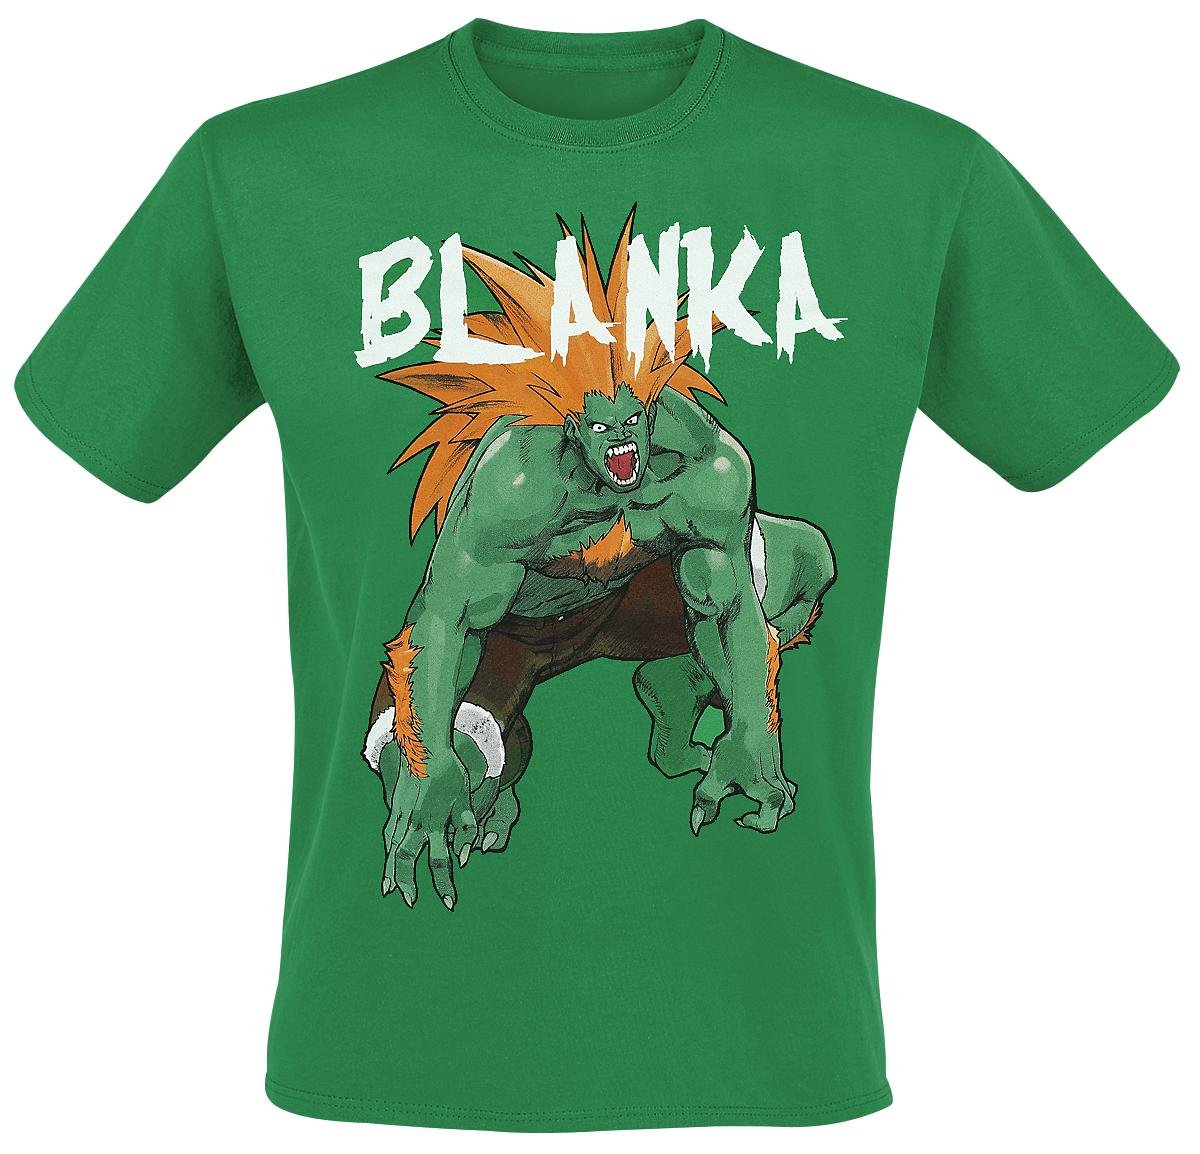 Meroncourt Herren Capcom Streetfighter Men's Blanka T-Shirt, grün, L